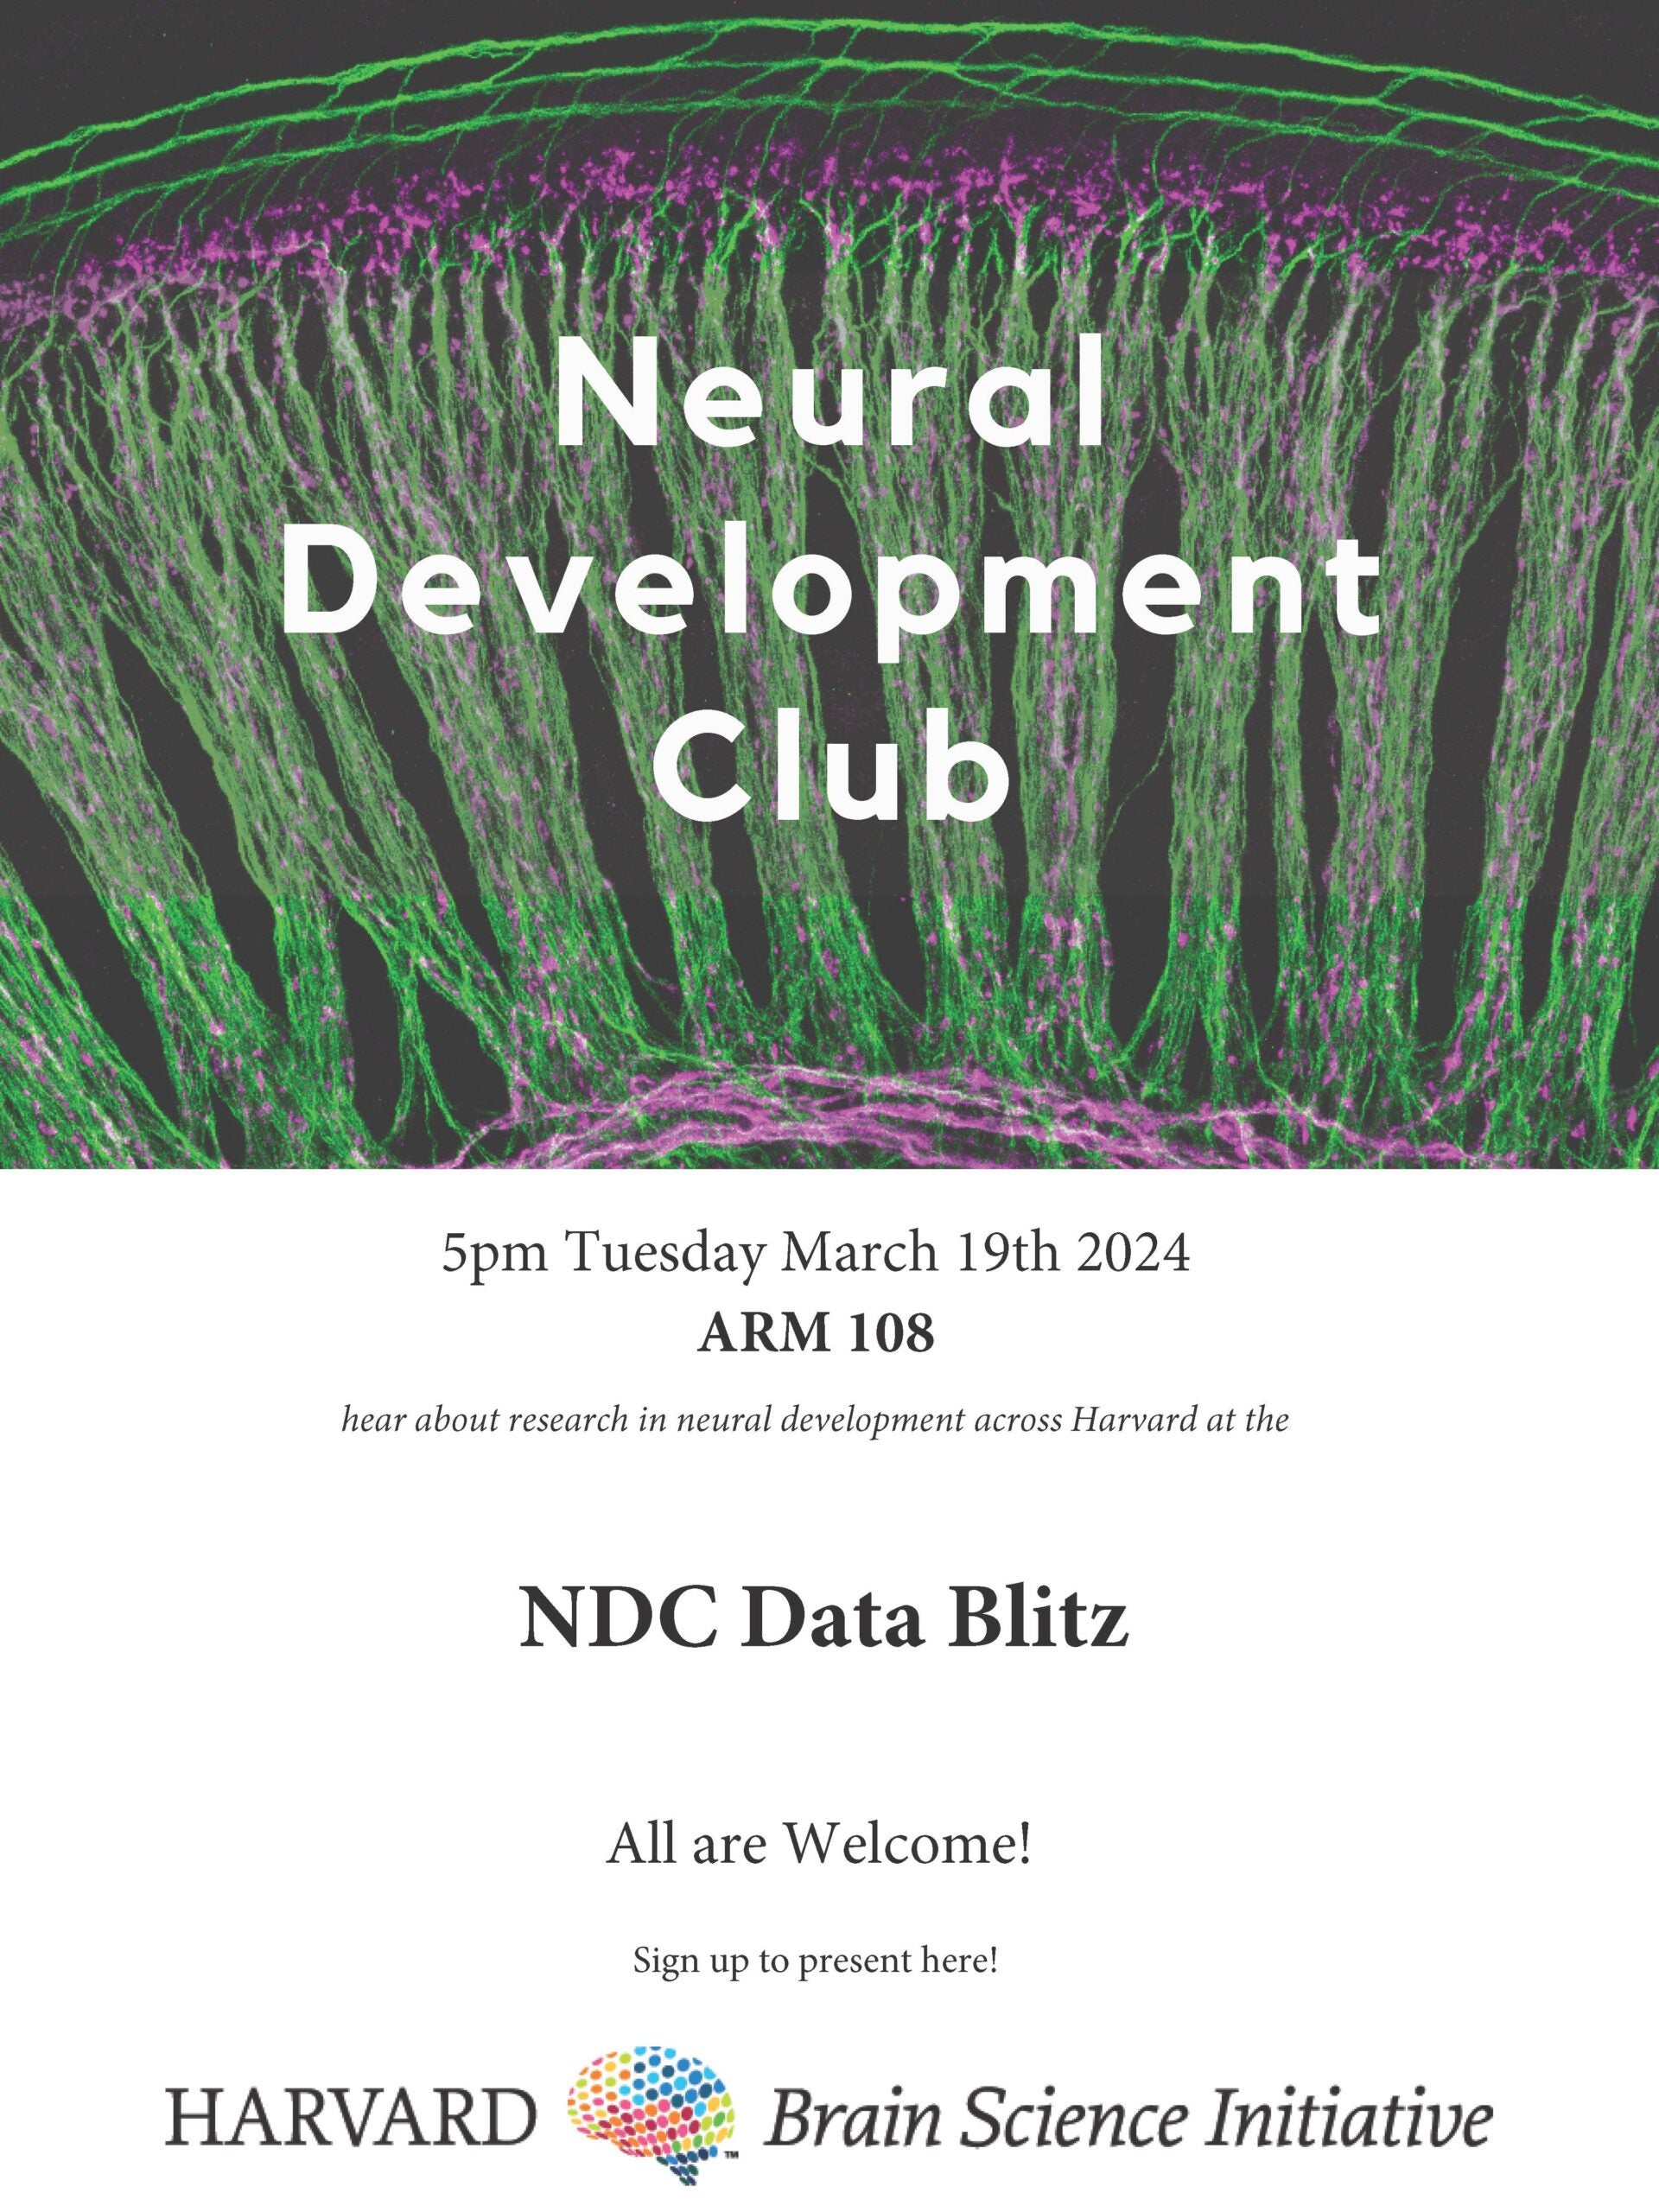 NDC Data blitz poster